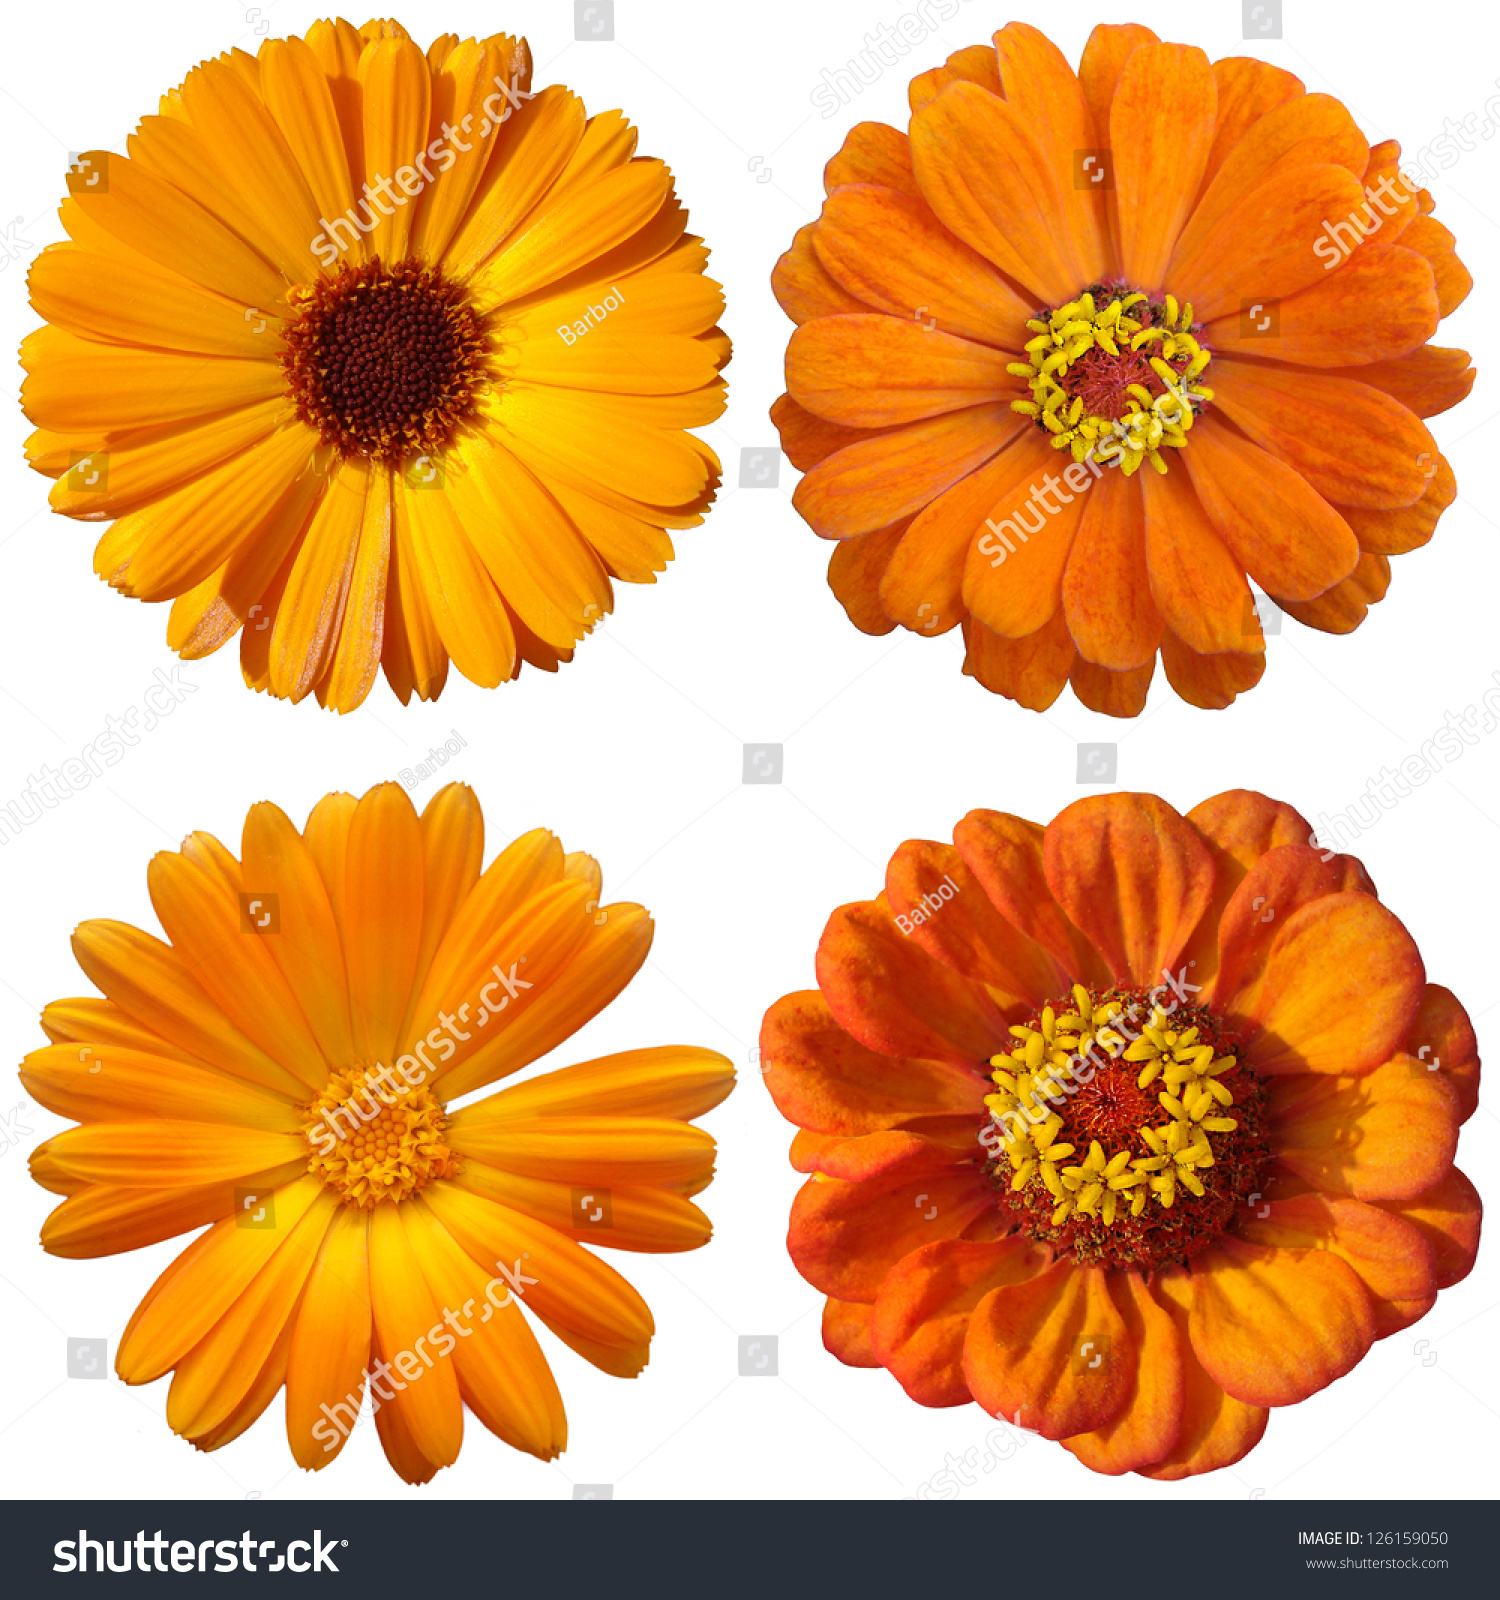 Collage Orange Flowers Stock Photo & Image (Royalty-Free) 126159050 ...